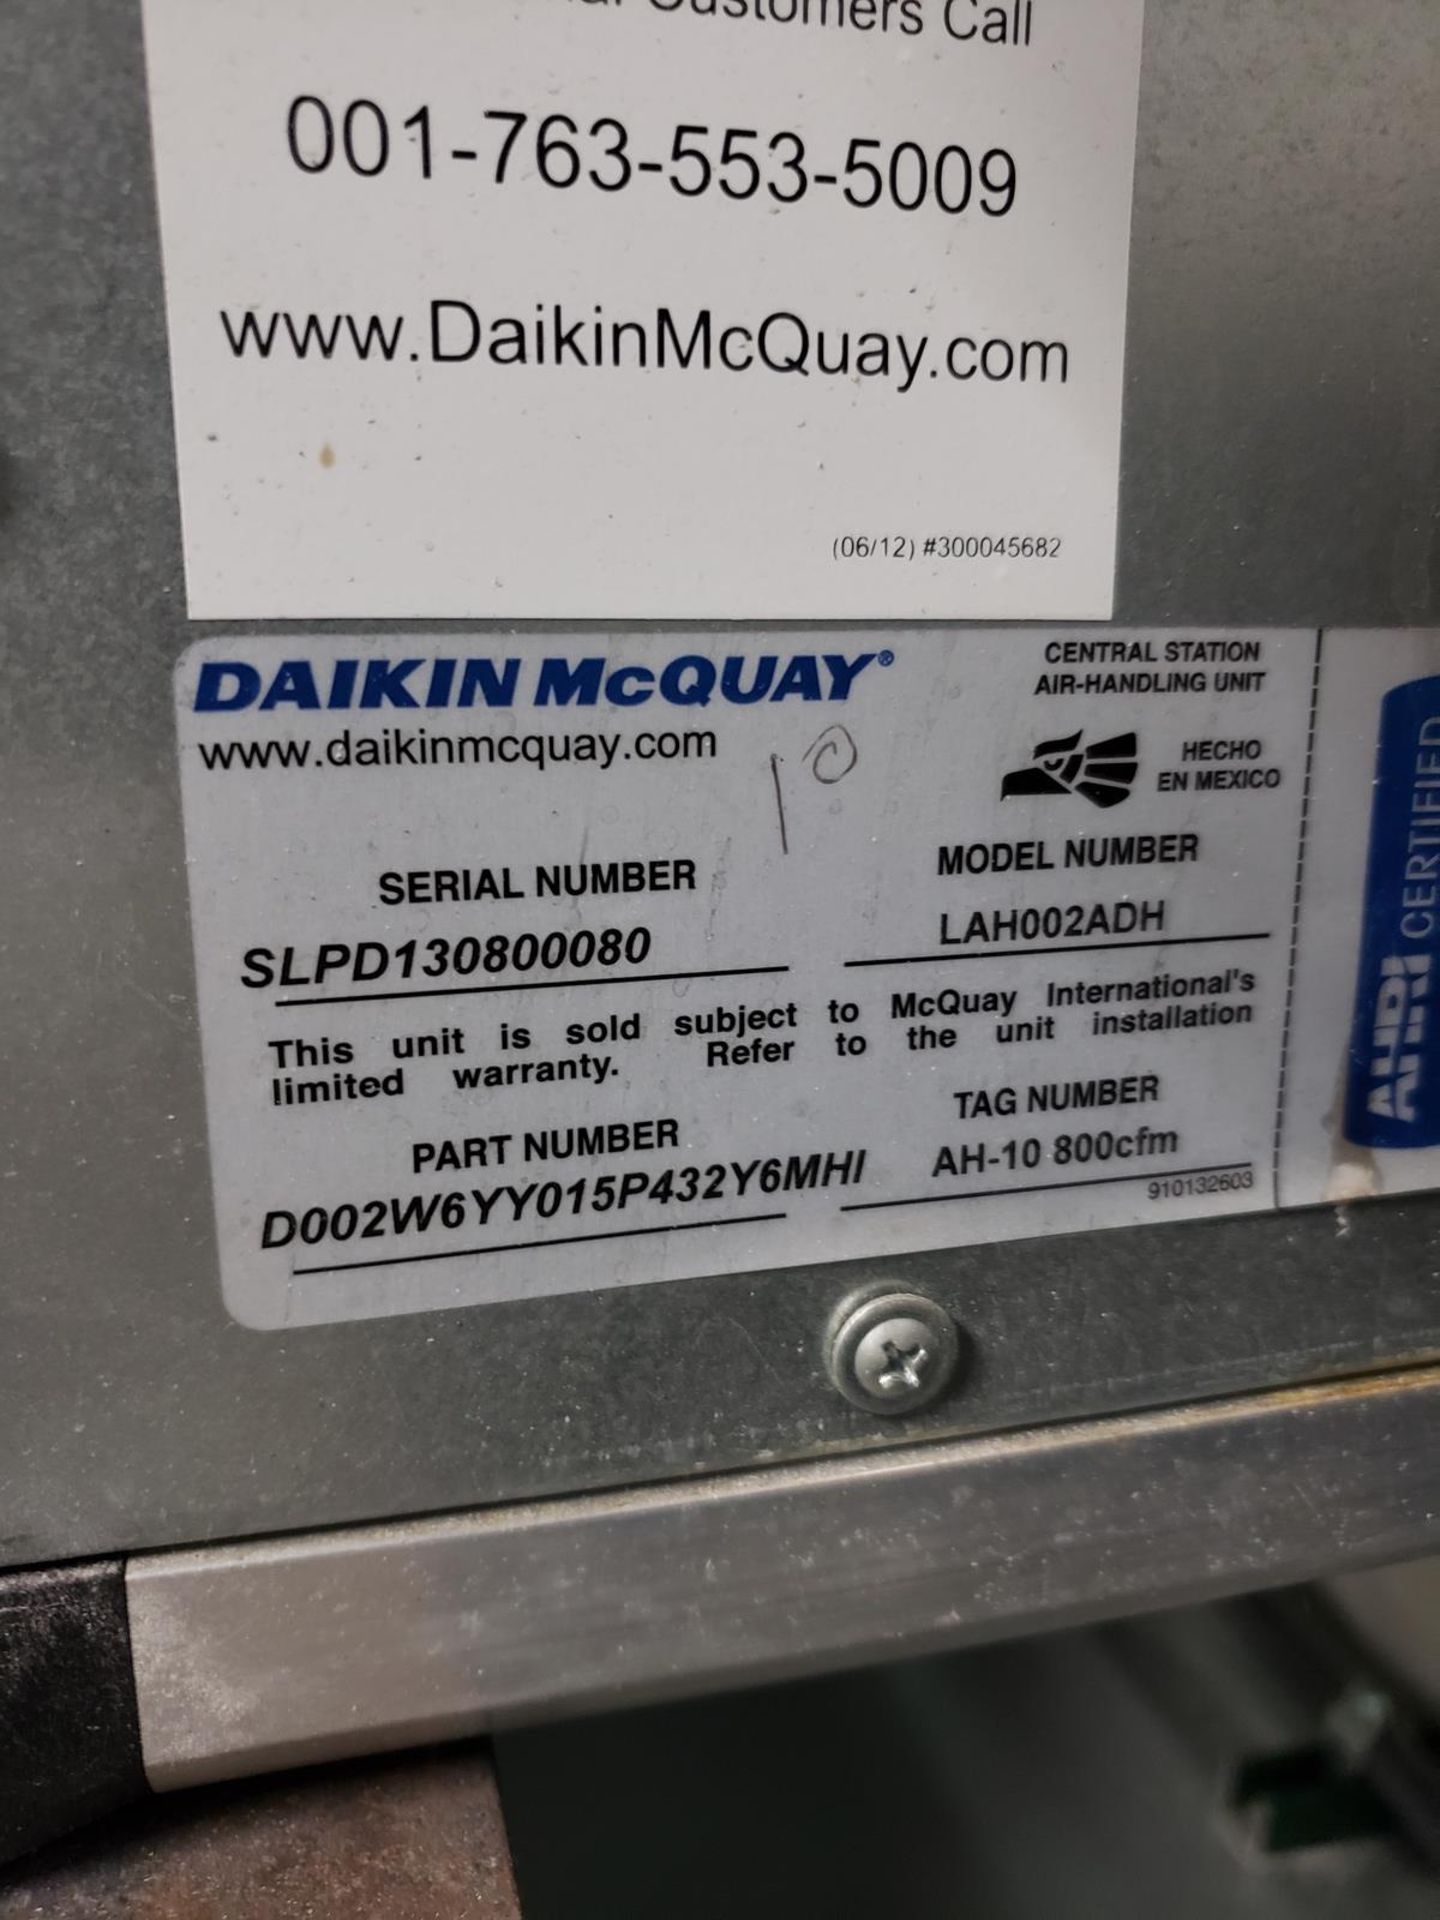 Daikin McQuay Central Station Air-Handling Unit, M# LAH002ADH, W/ Nortec Humidifier | Rig Fee $500 - Image 2 of 3